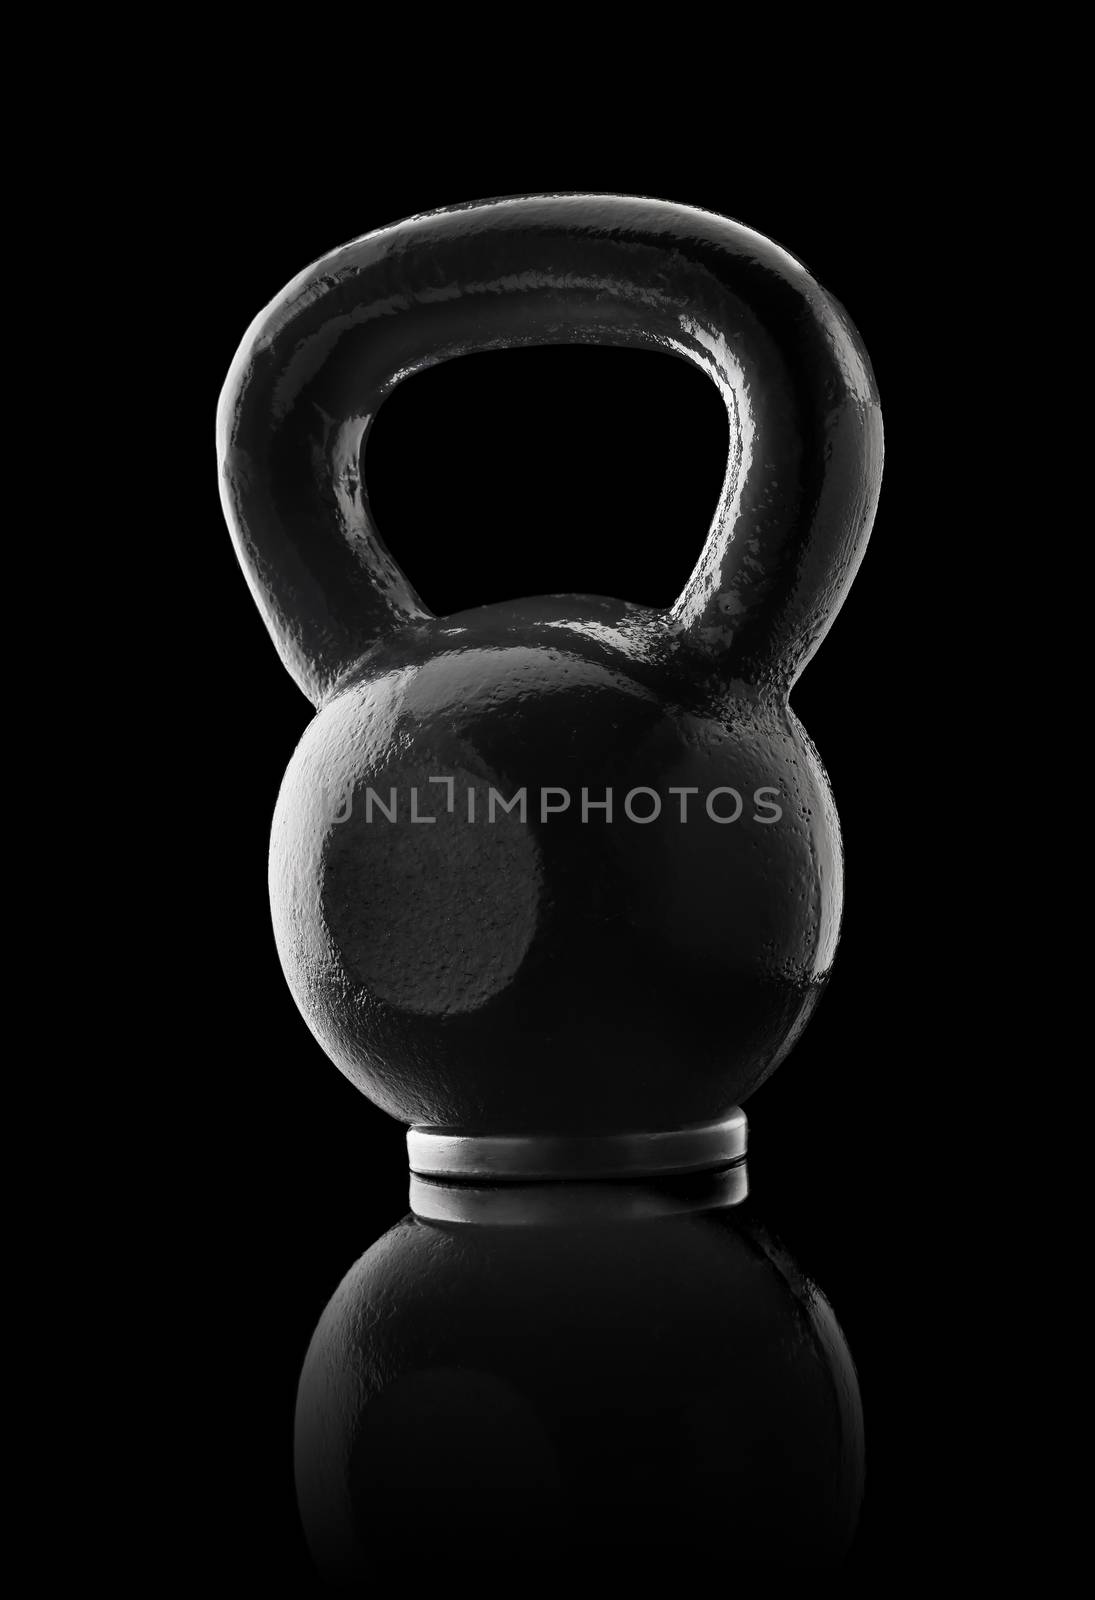 Black metallic kettlebell on black reflective background.